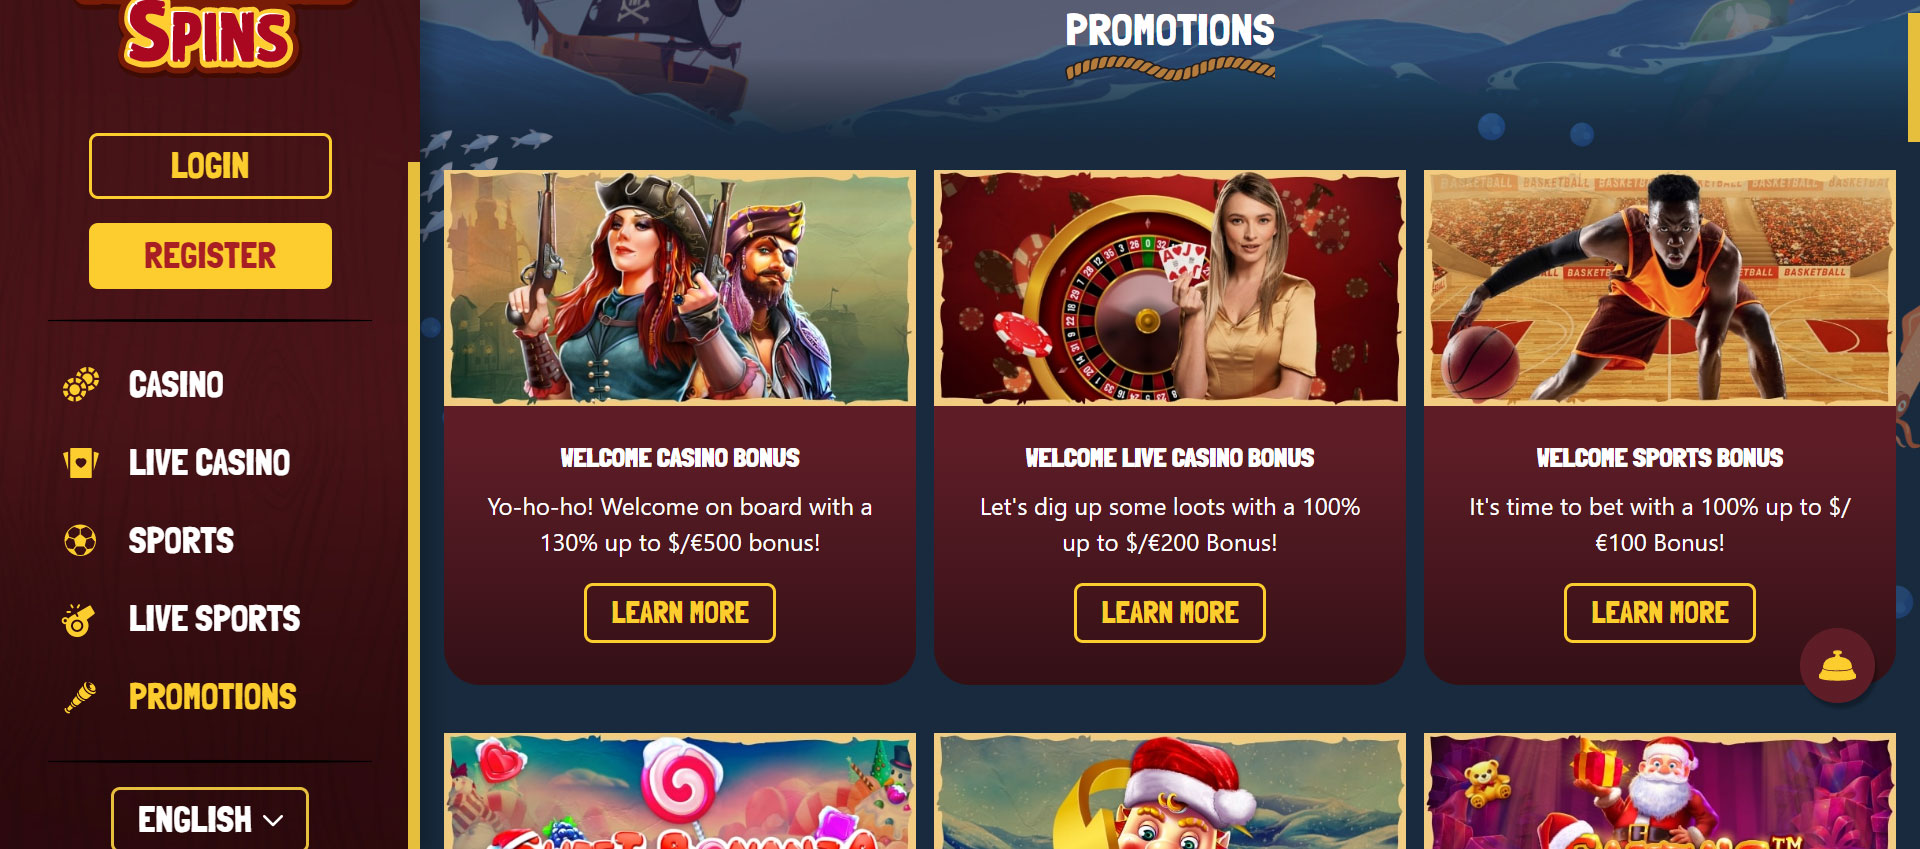 Treasure Spins Casino Promotions